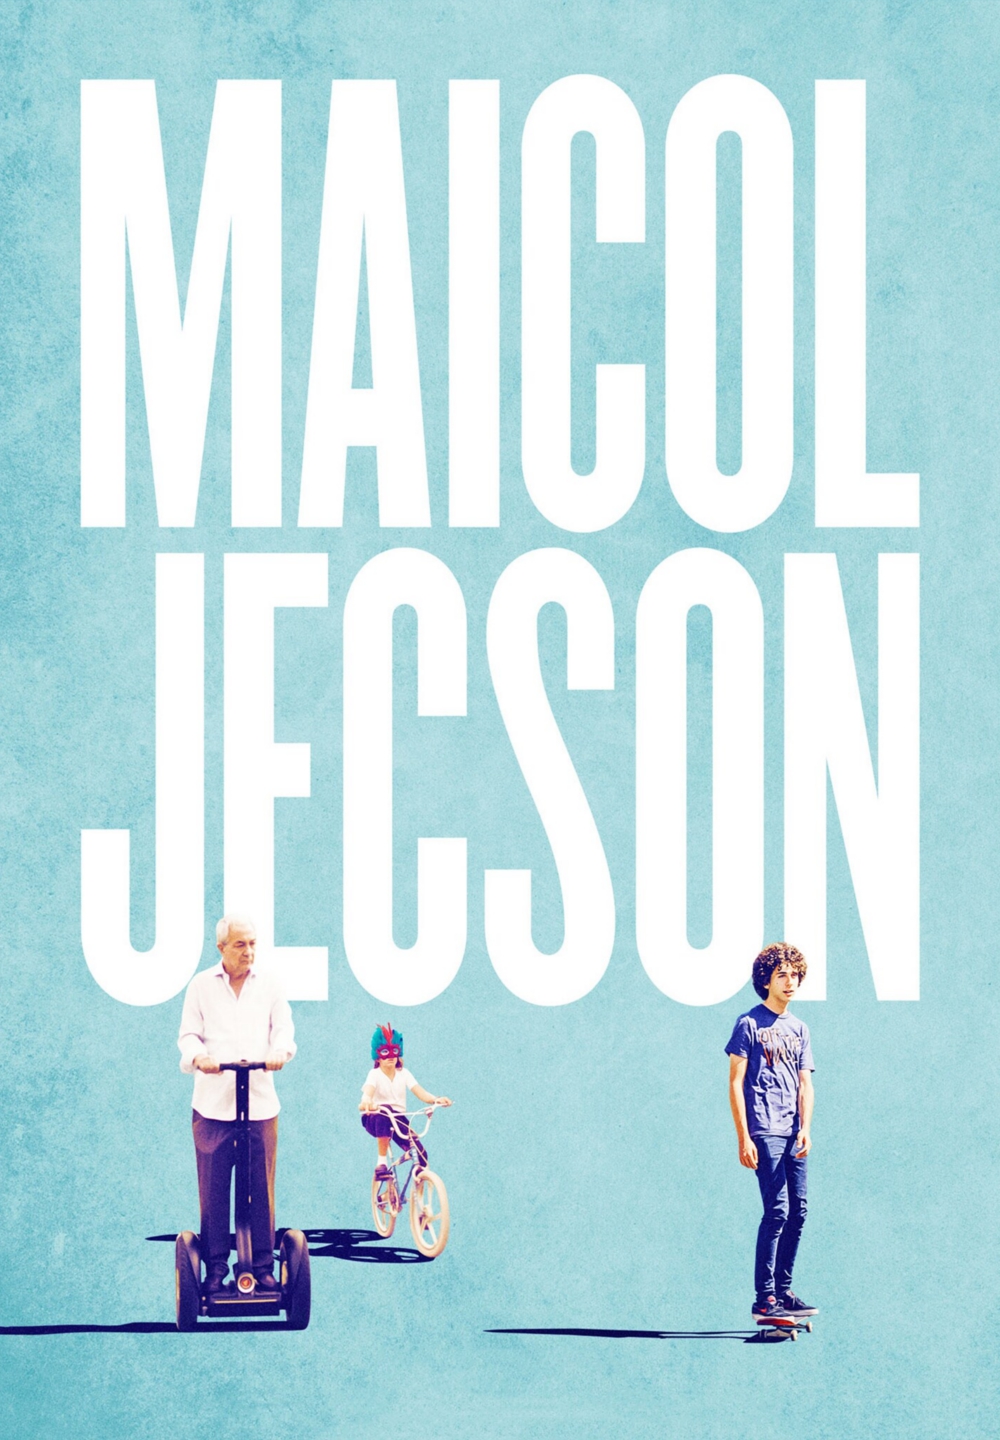 Maicol Jecson (2014)